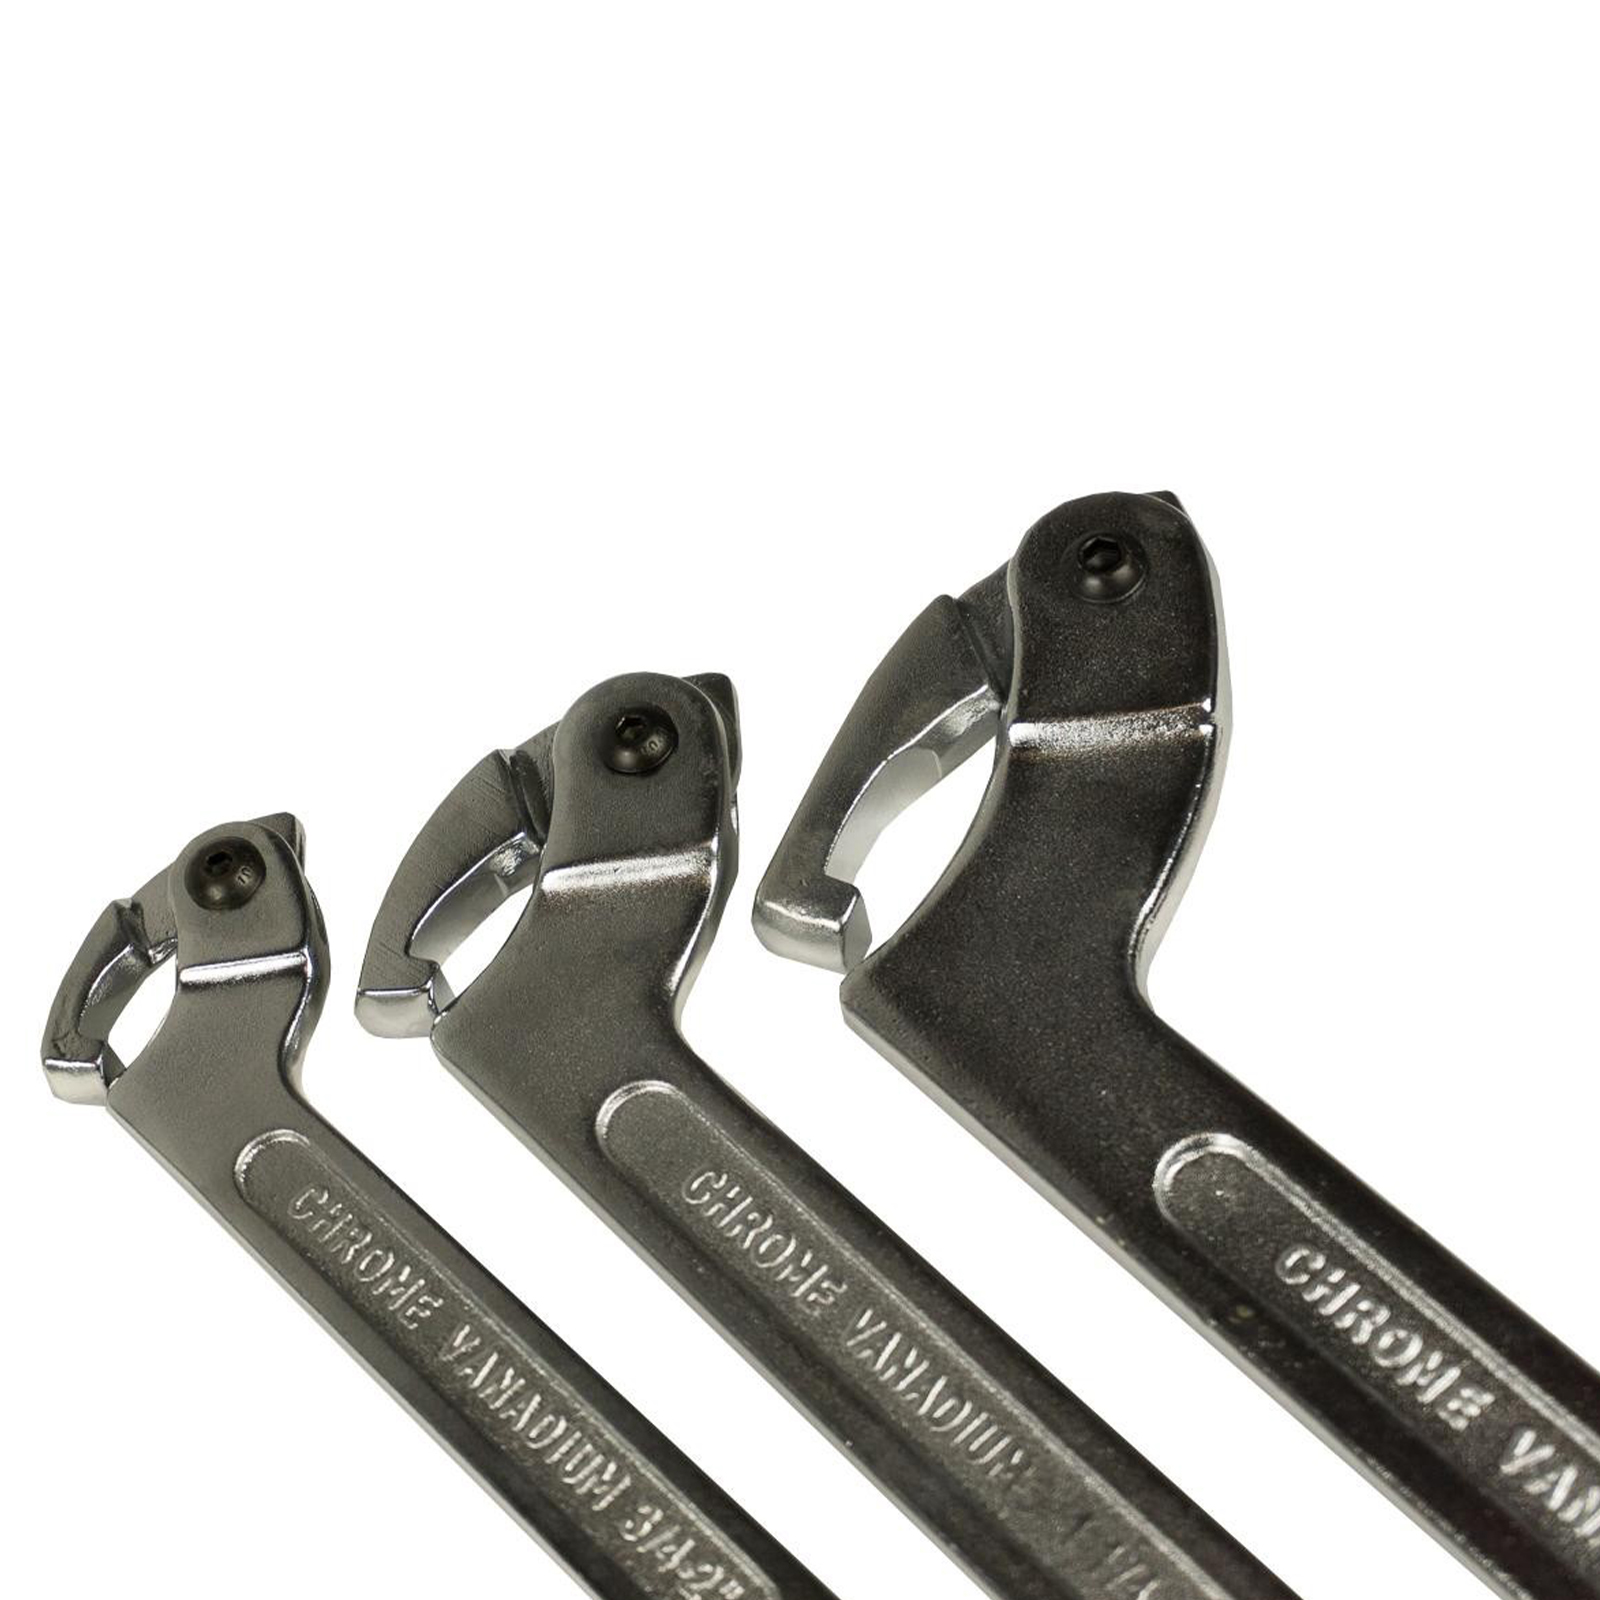 Hook & Pin Wrench C Spanner Tool Set